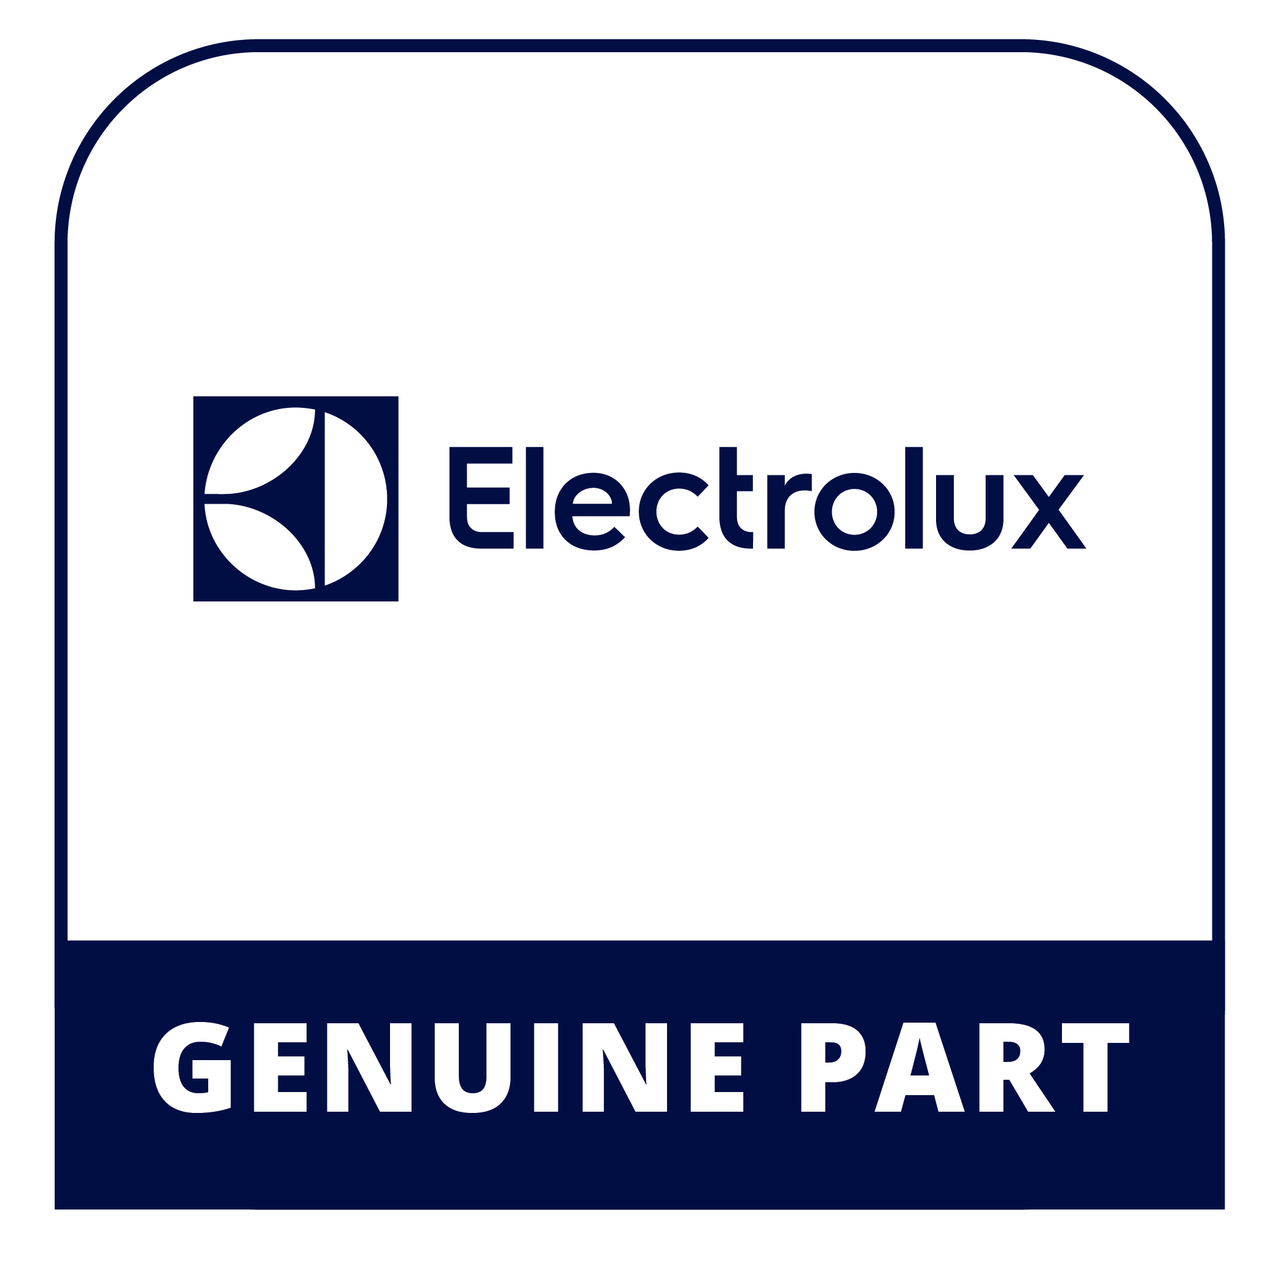 Frigidaire - Electrolux 5304525318 Wrench Kit - Genuine Electrolux Part